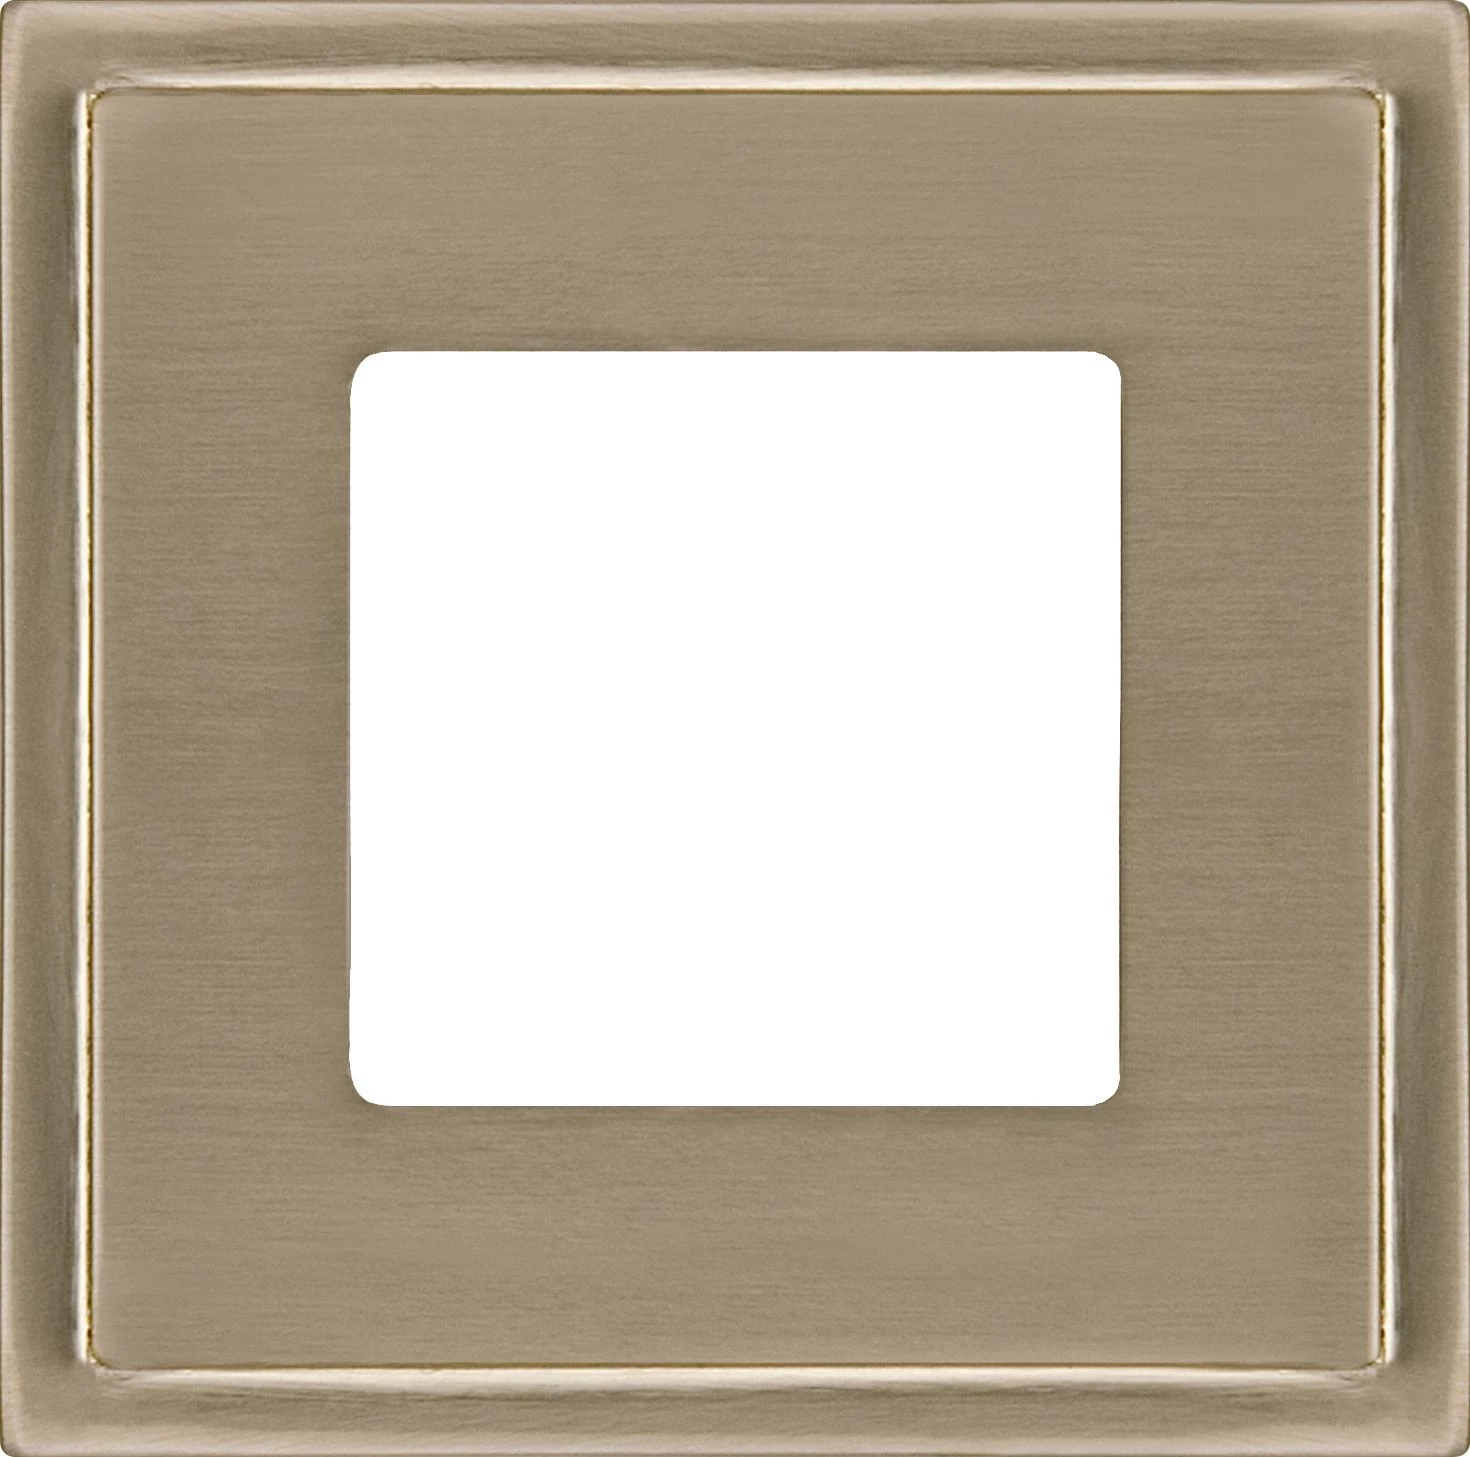  артикул FD01241NS название Рамка 1-ая (одинарная), цвет Никель, Madrid, Fede